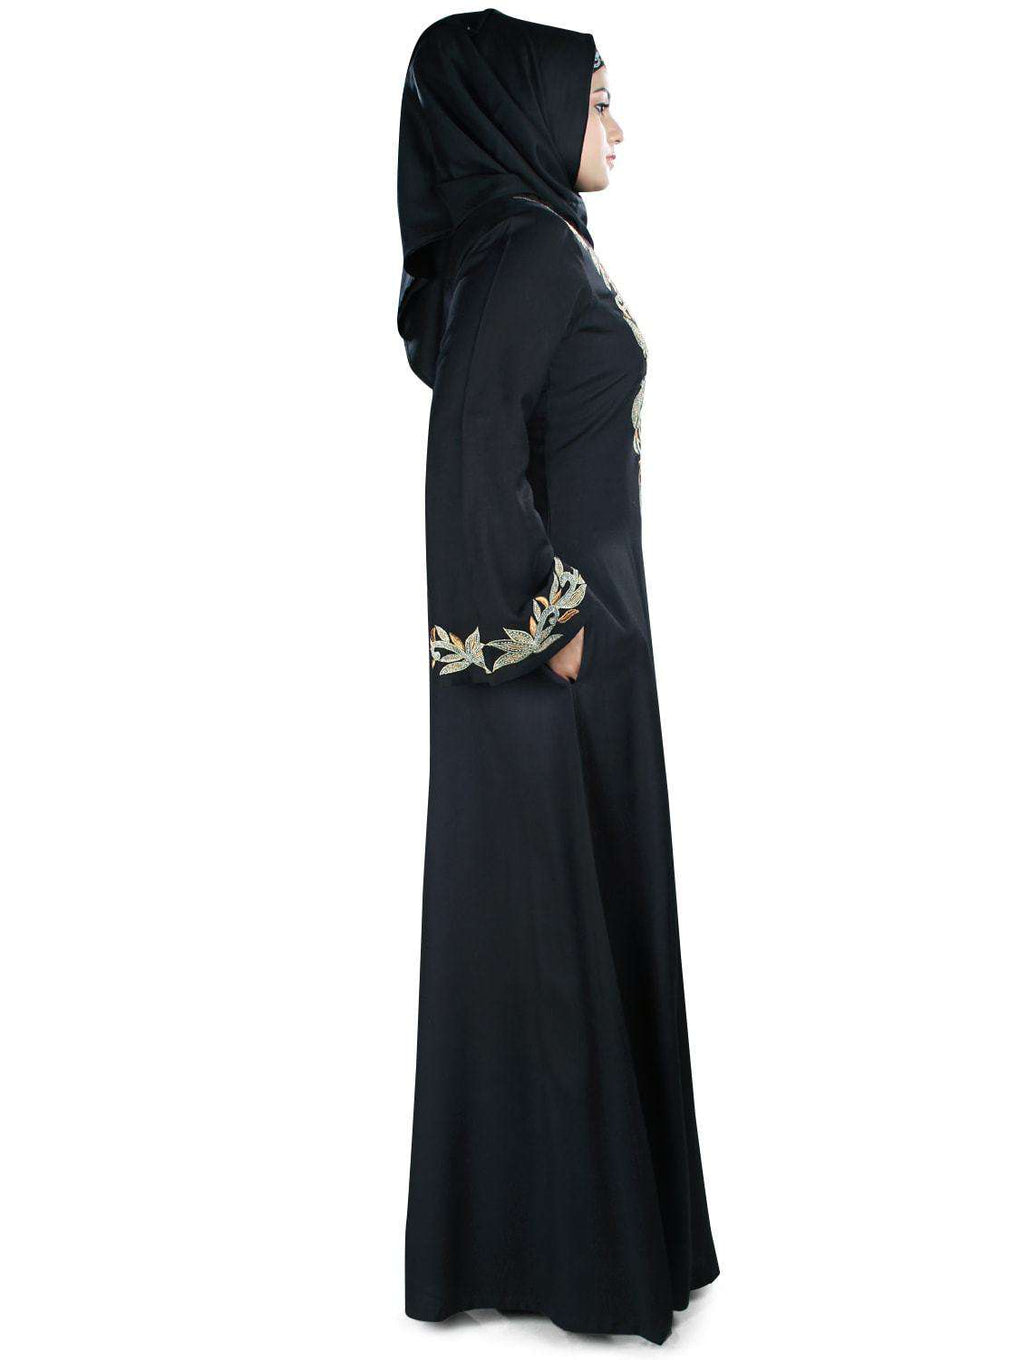 Buy Hifza Rayon Embroidered Black Abaya Online – MyBatua.com